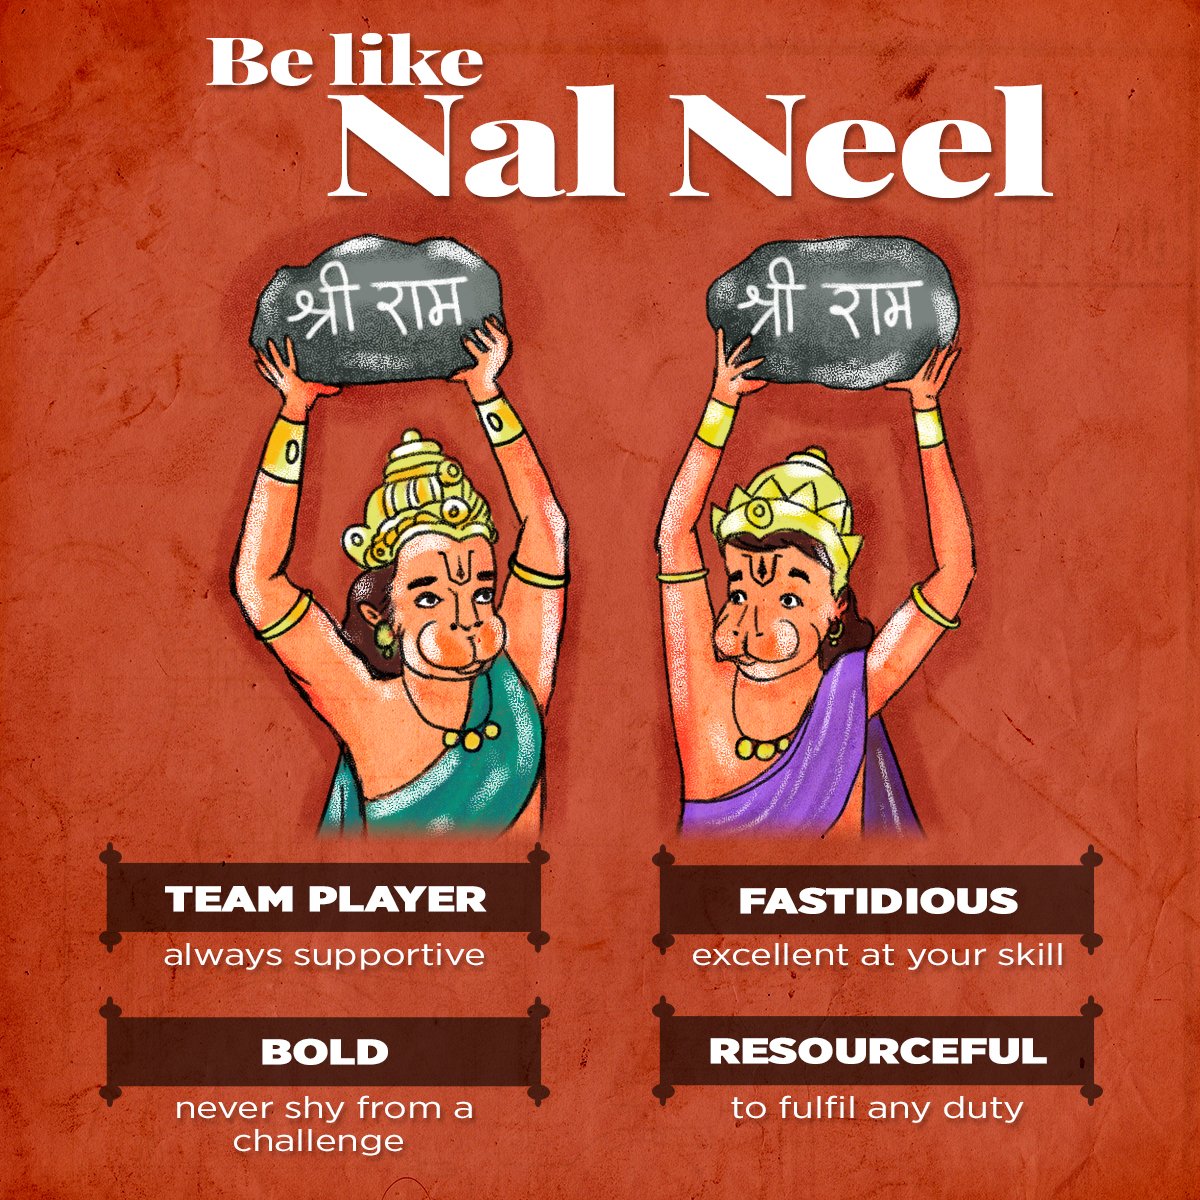 11. Be like Nal Neel - team players, resourceful, bold & fastidious! #LessonsFromRamayana  #JaiShriRam  #RamMandir